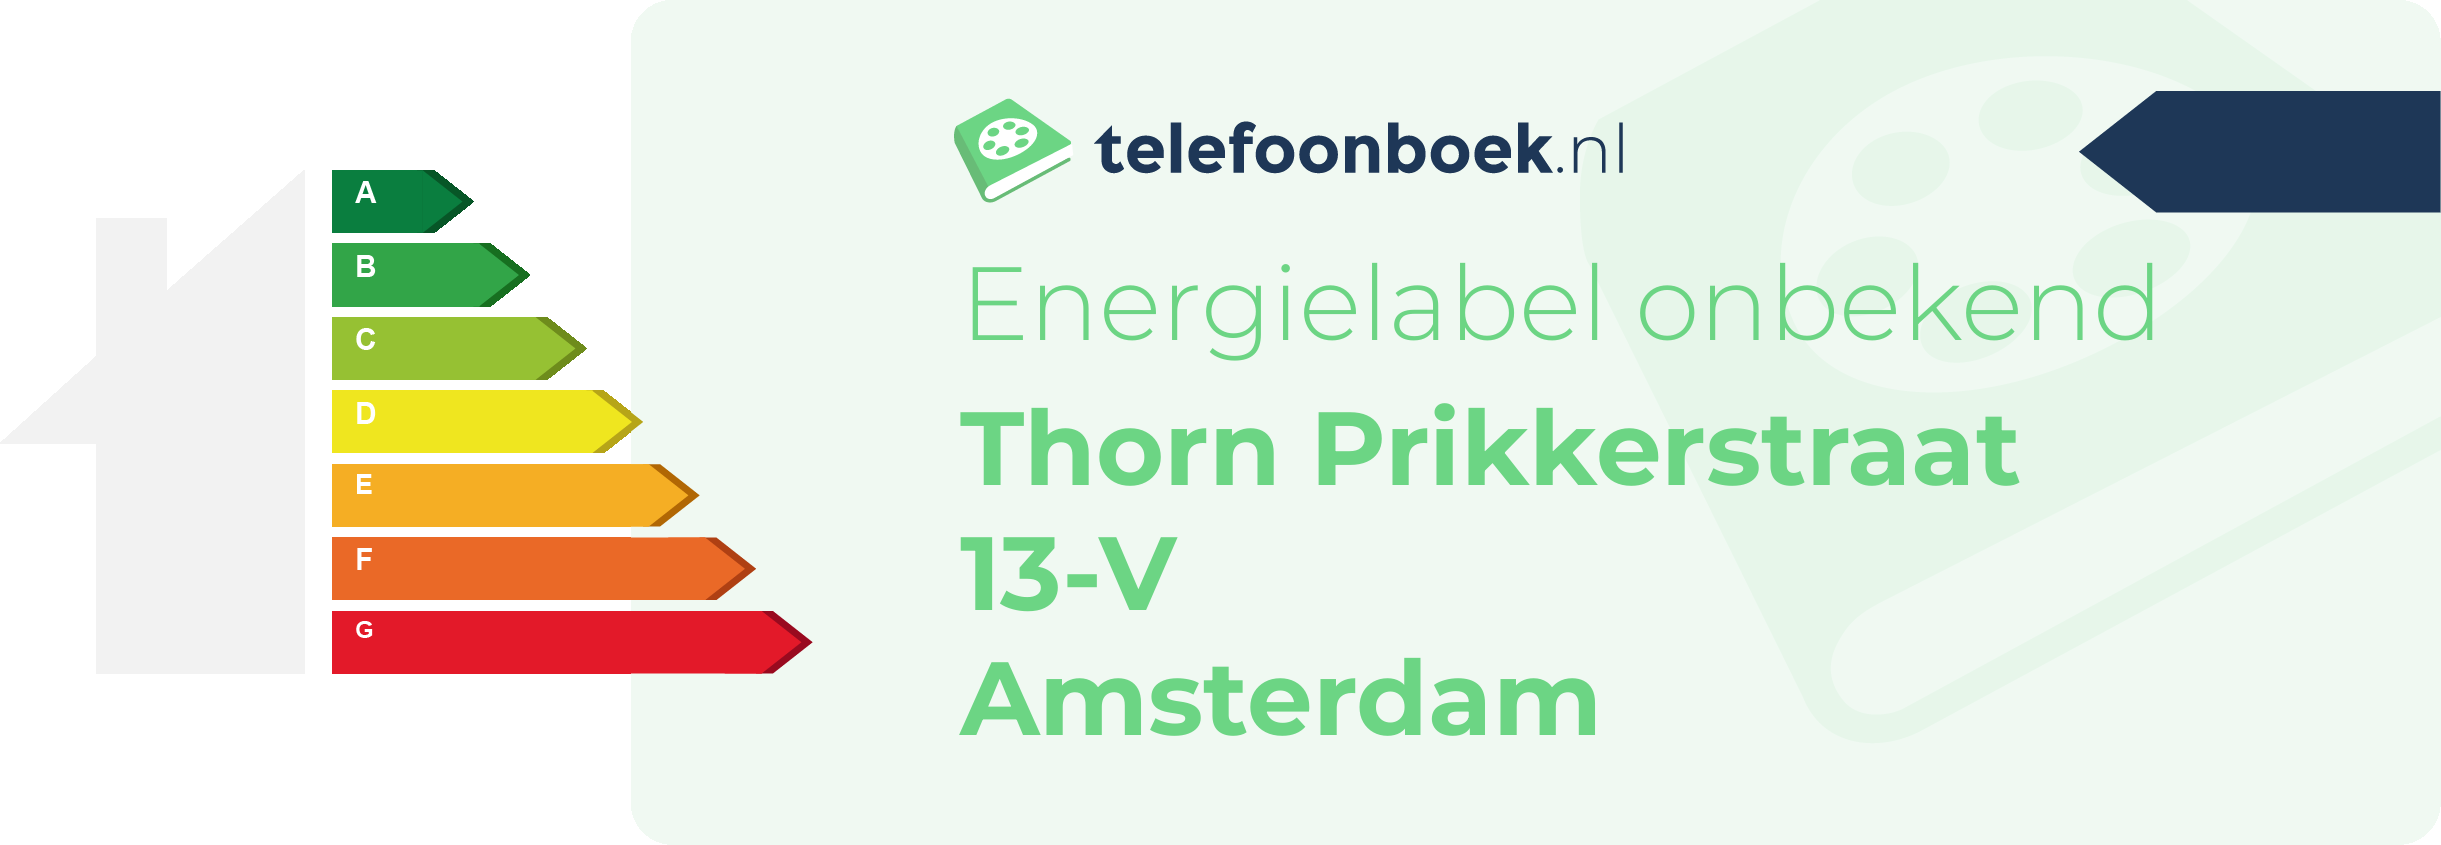 Energielabel Thorn Prikkerstraat 13-V Amsterdam